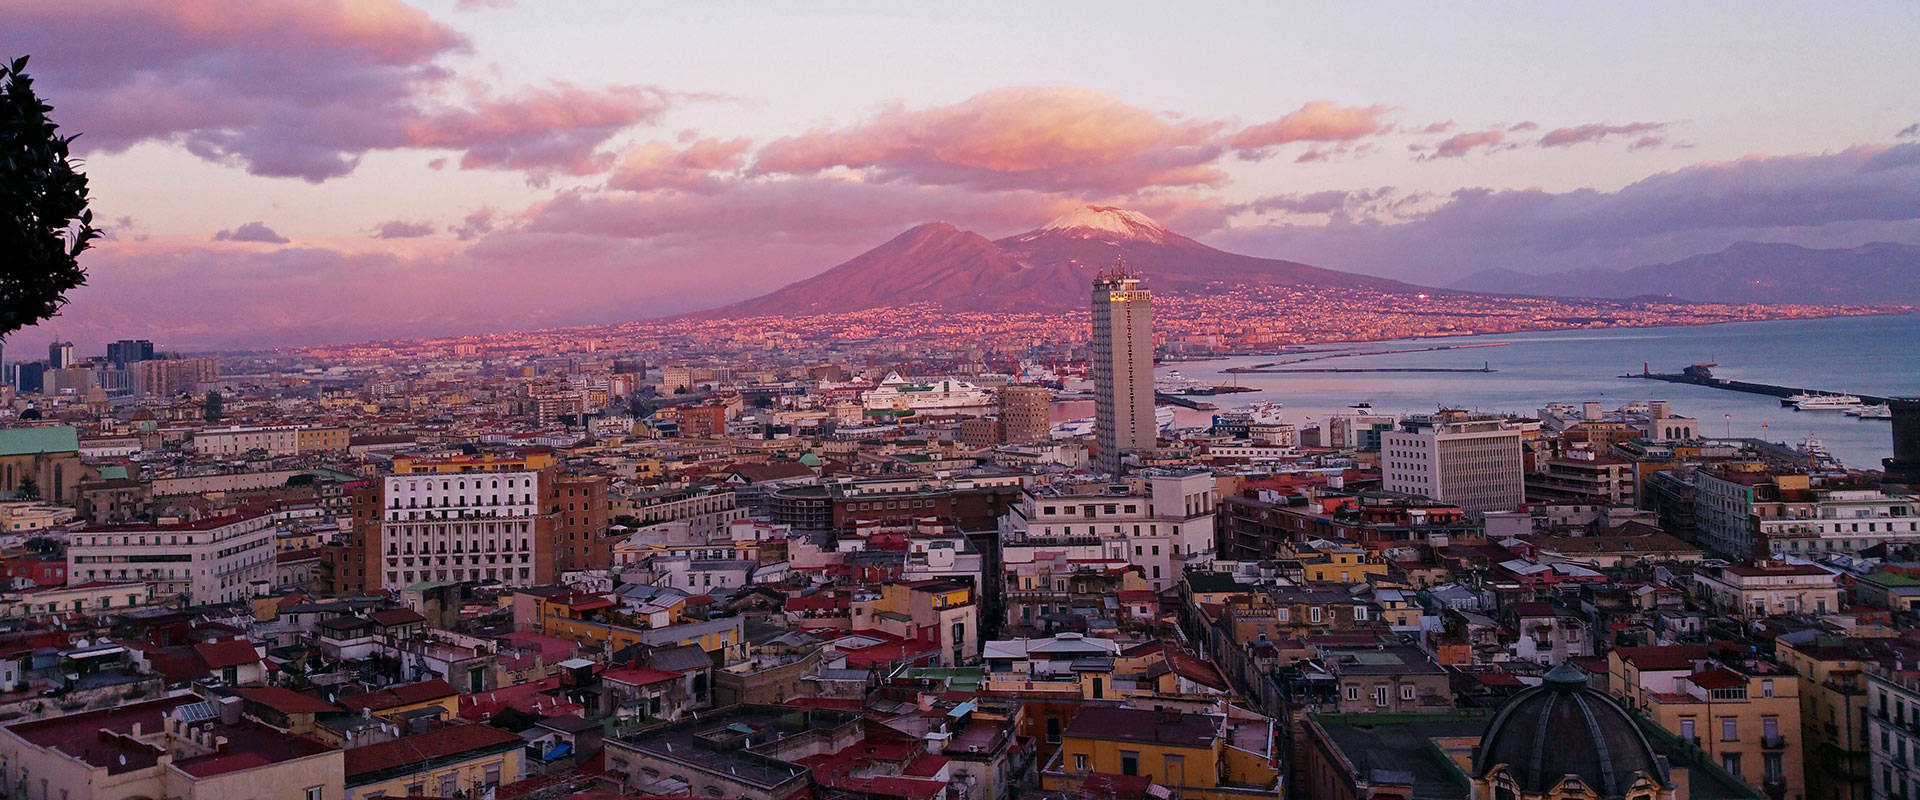 Naples City Panoramic Photograph Background